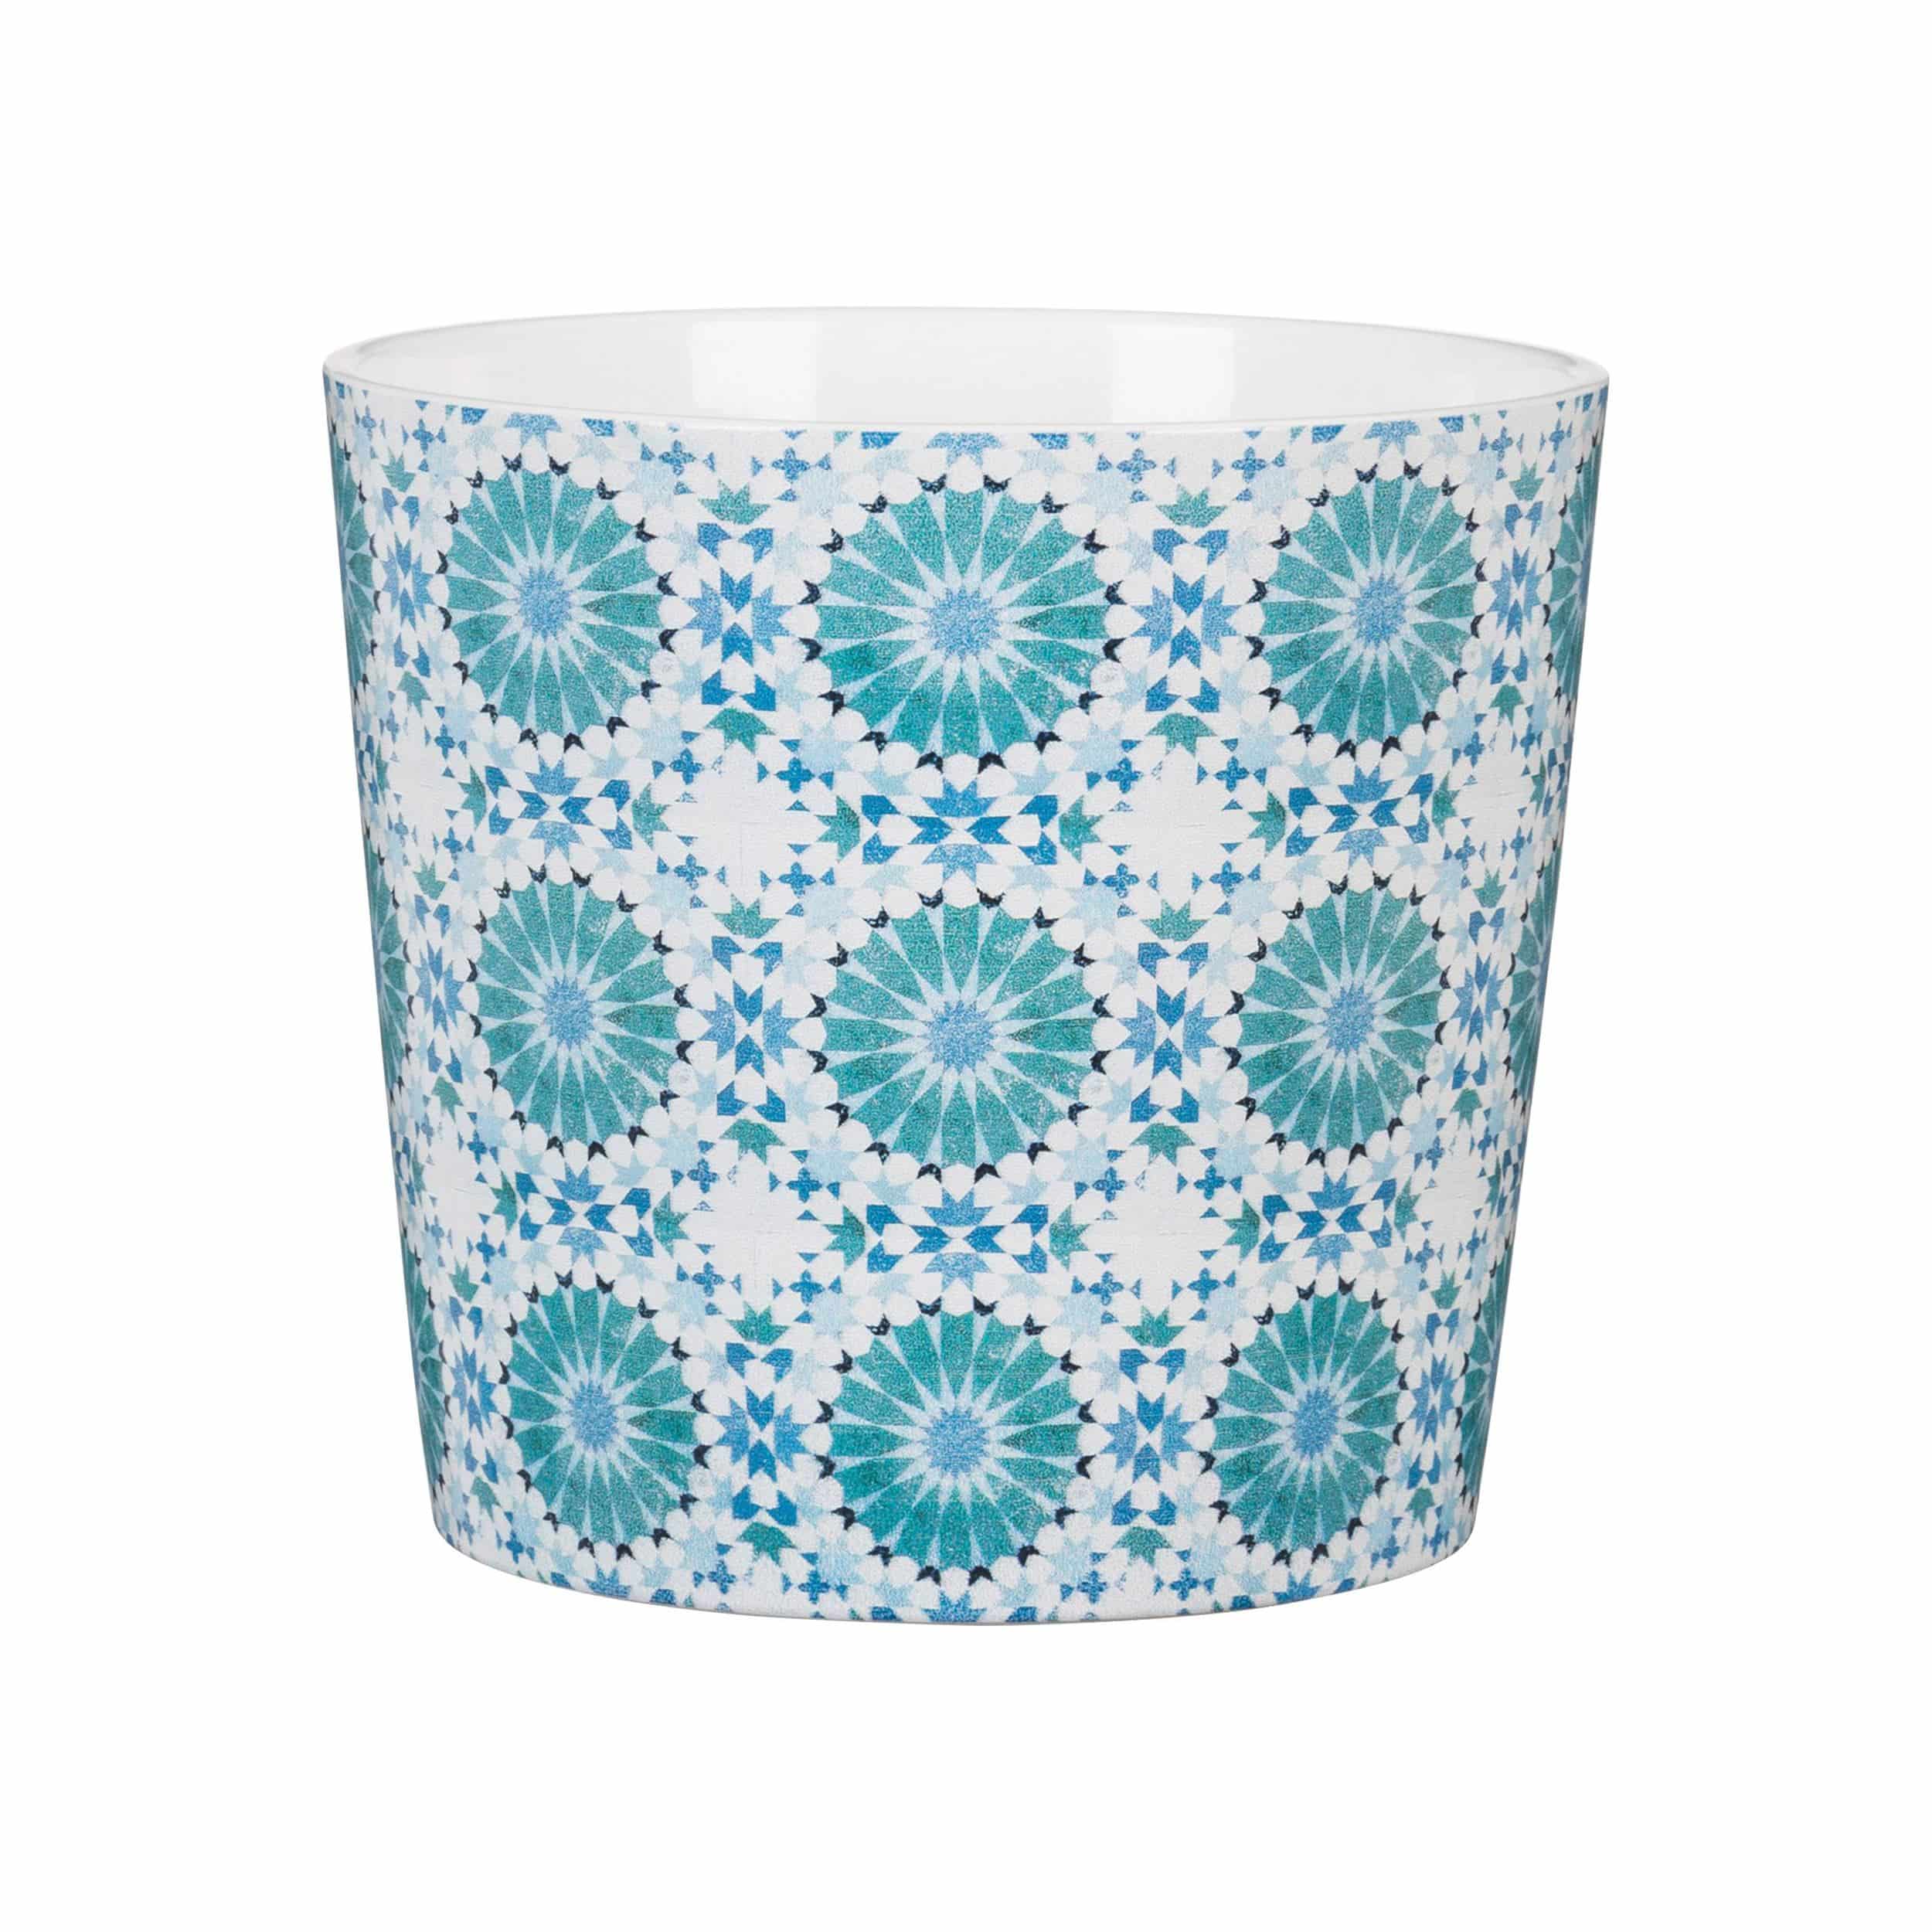 Keramik-Blumentopf Mosaic D15 cm blau-weiß